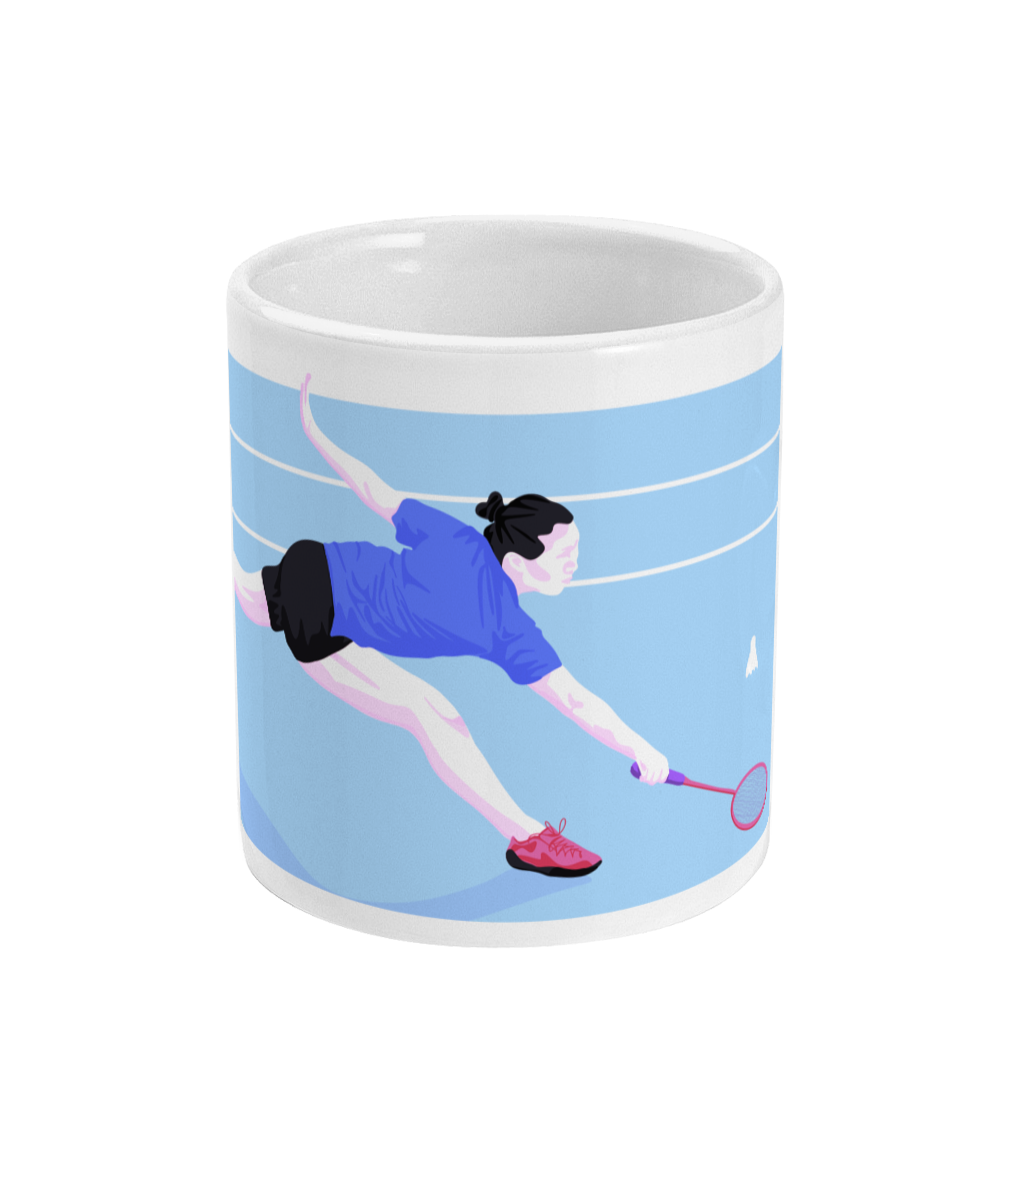 Cup or mug "Badminton player" - Customizable